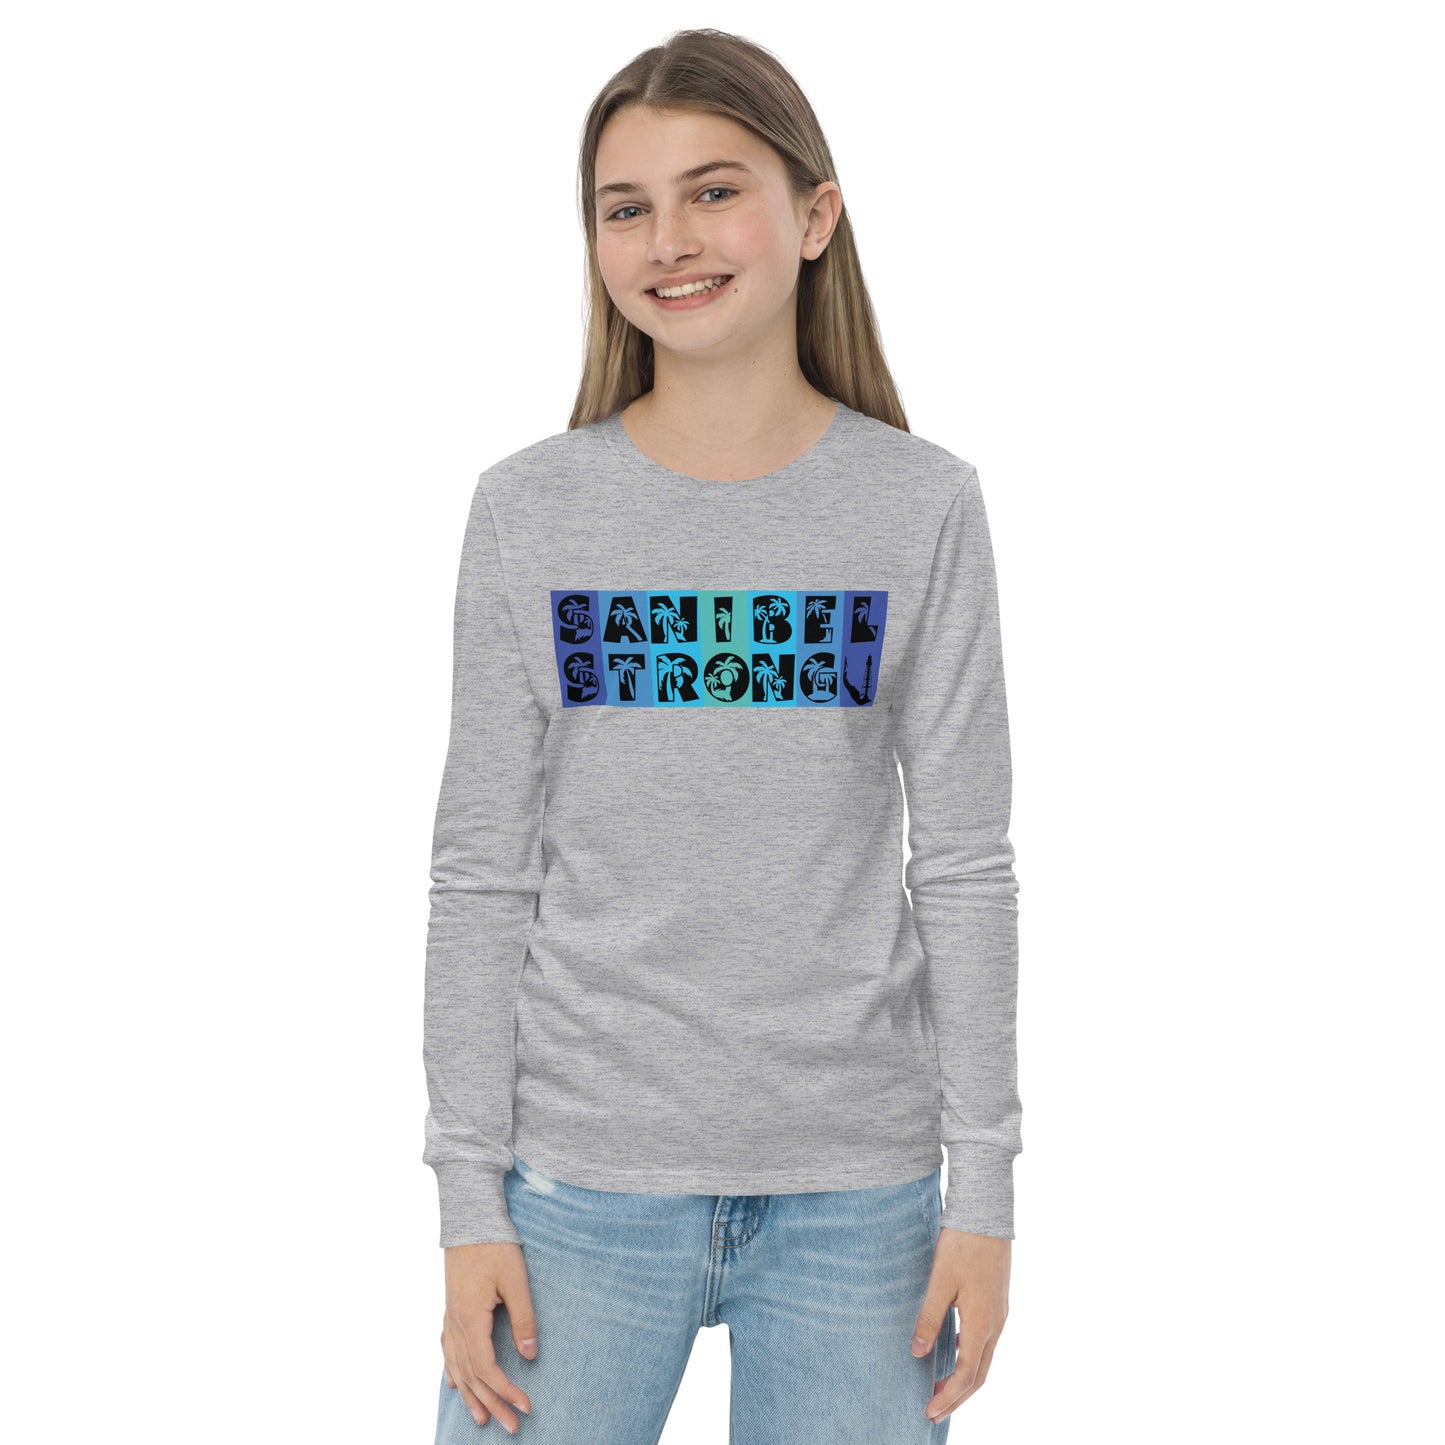 Sanibel Strong Youth Long Sleeve Shirt - Blue Design